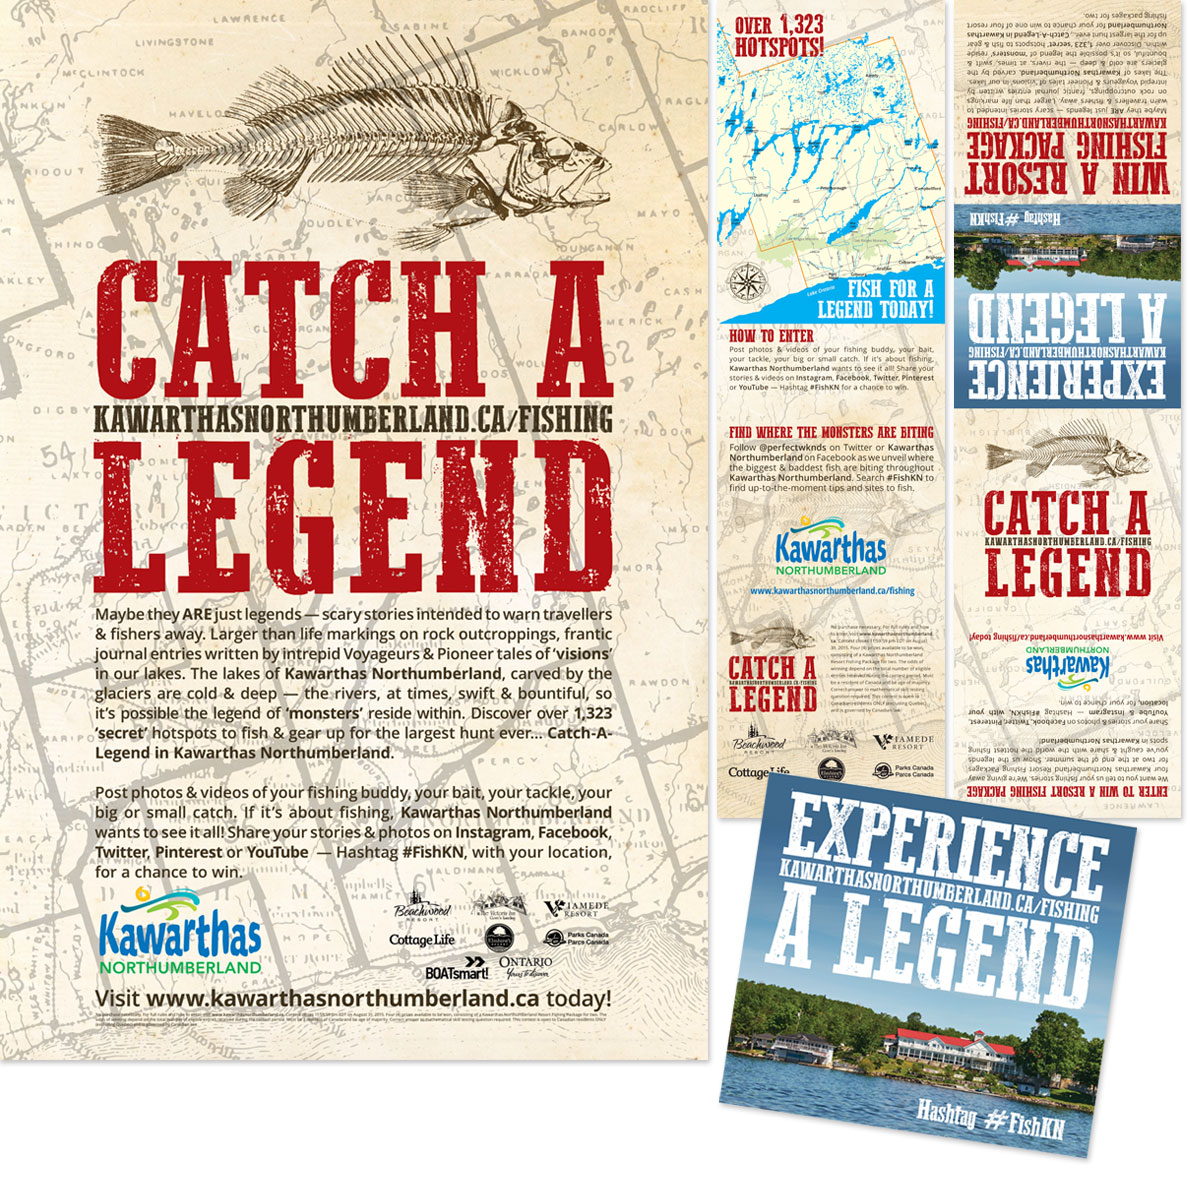 Kawarthas Northumberland - Catch A Legend - Collateral, Branding & Responsive Website